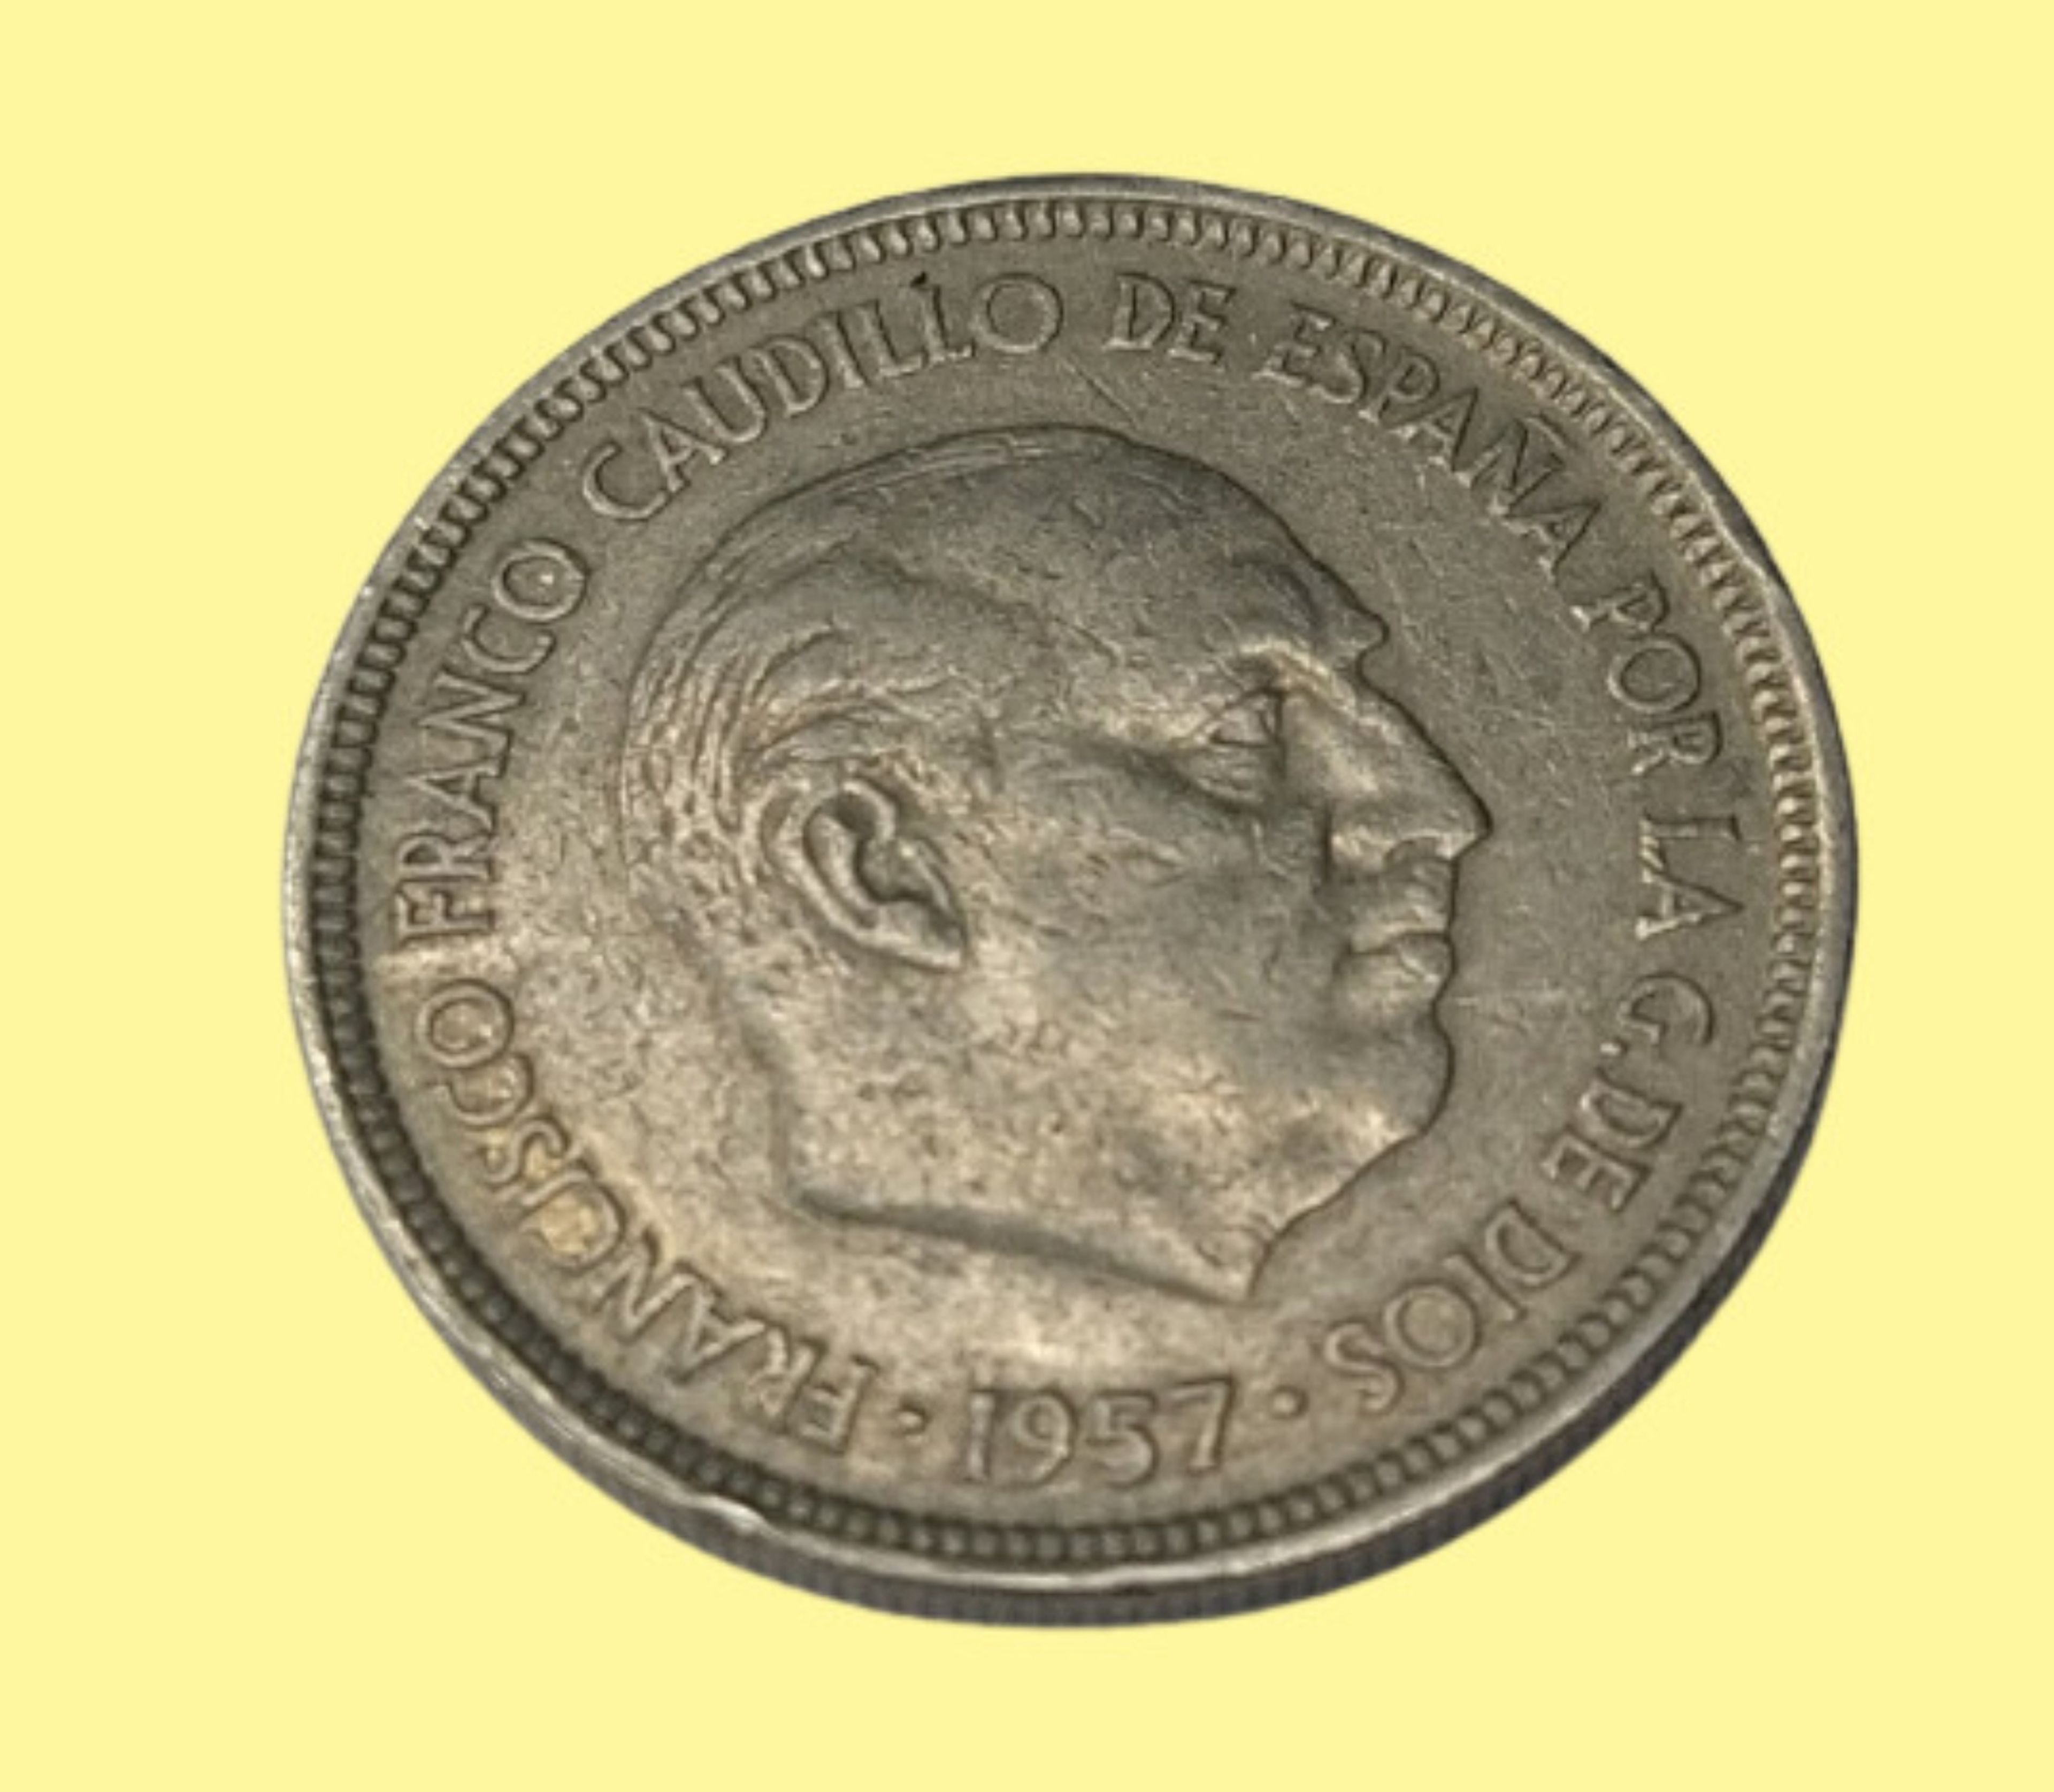 25 pesetas de 1957